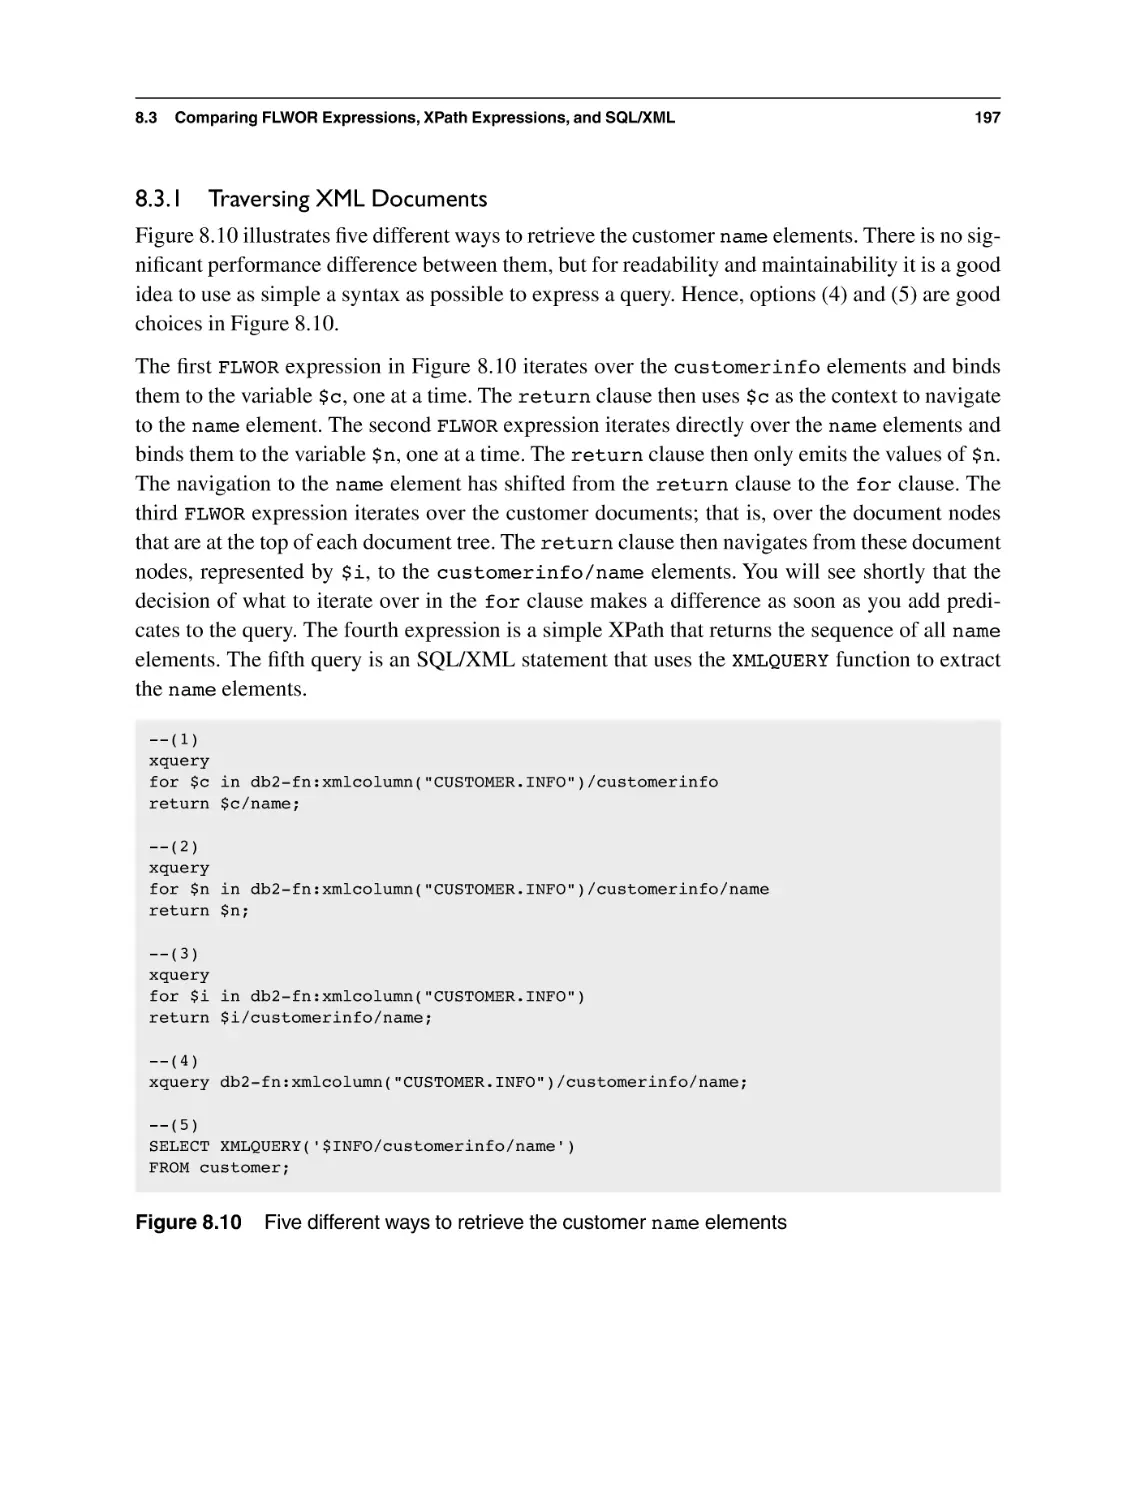 8.3.1 Traversing XML Documents